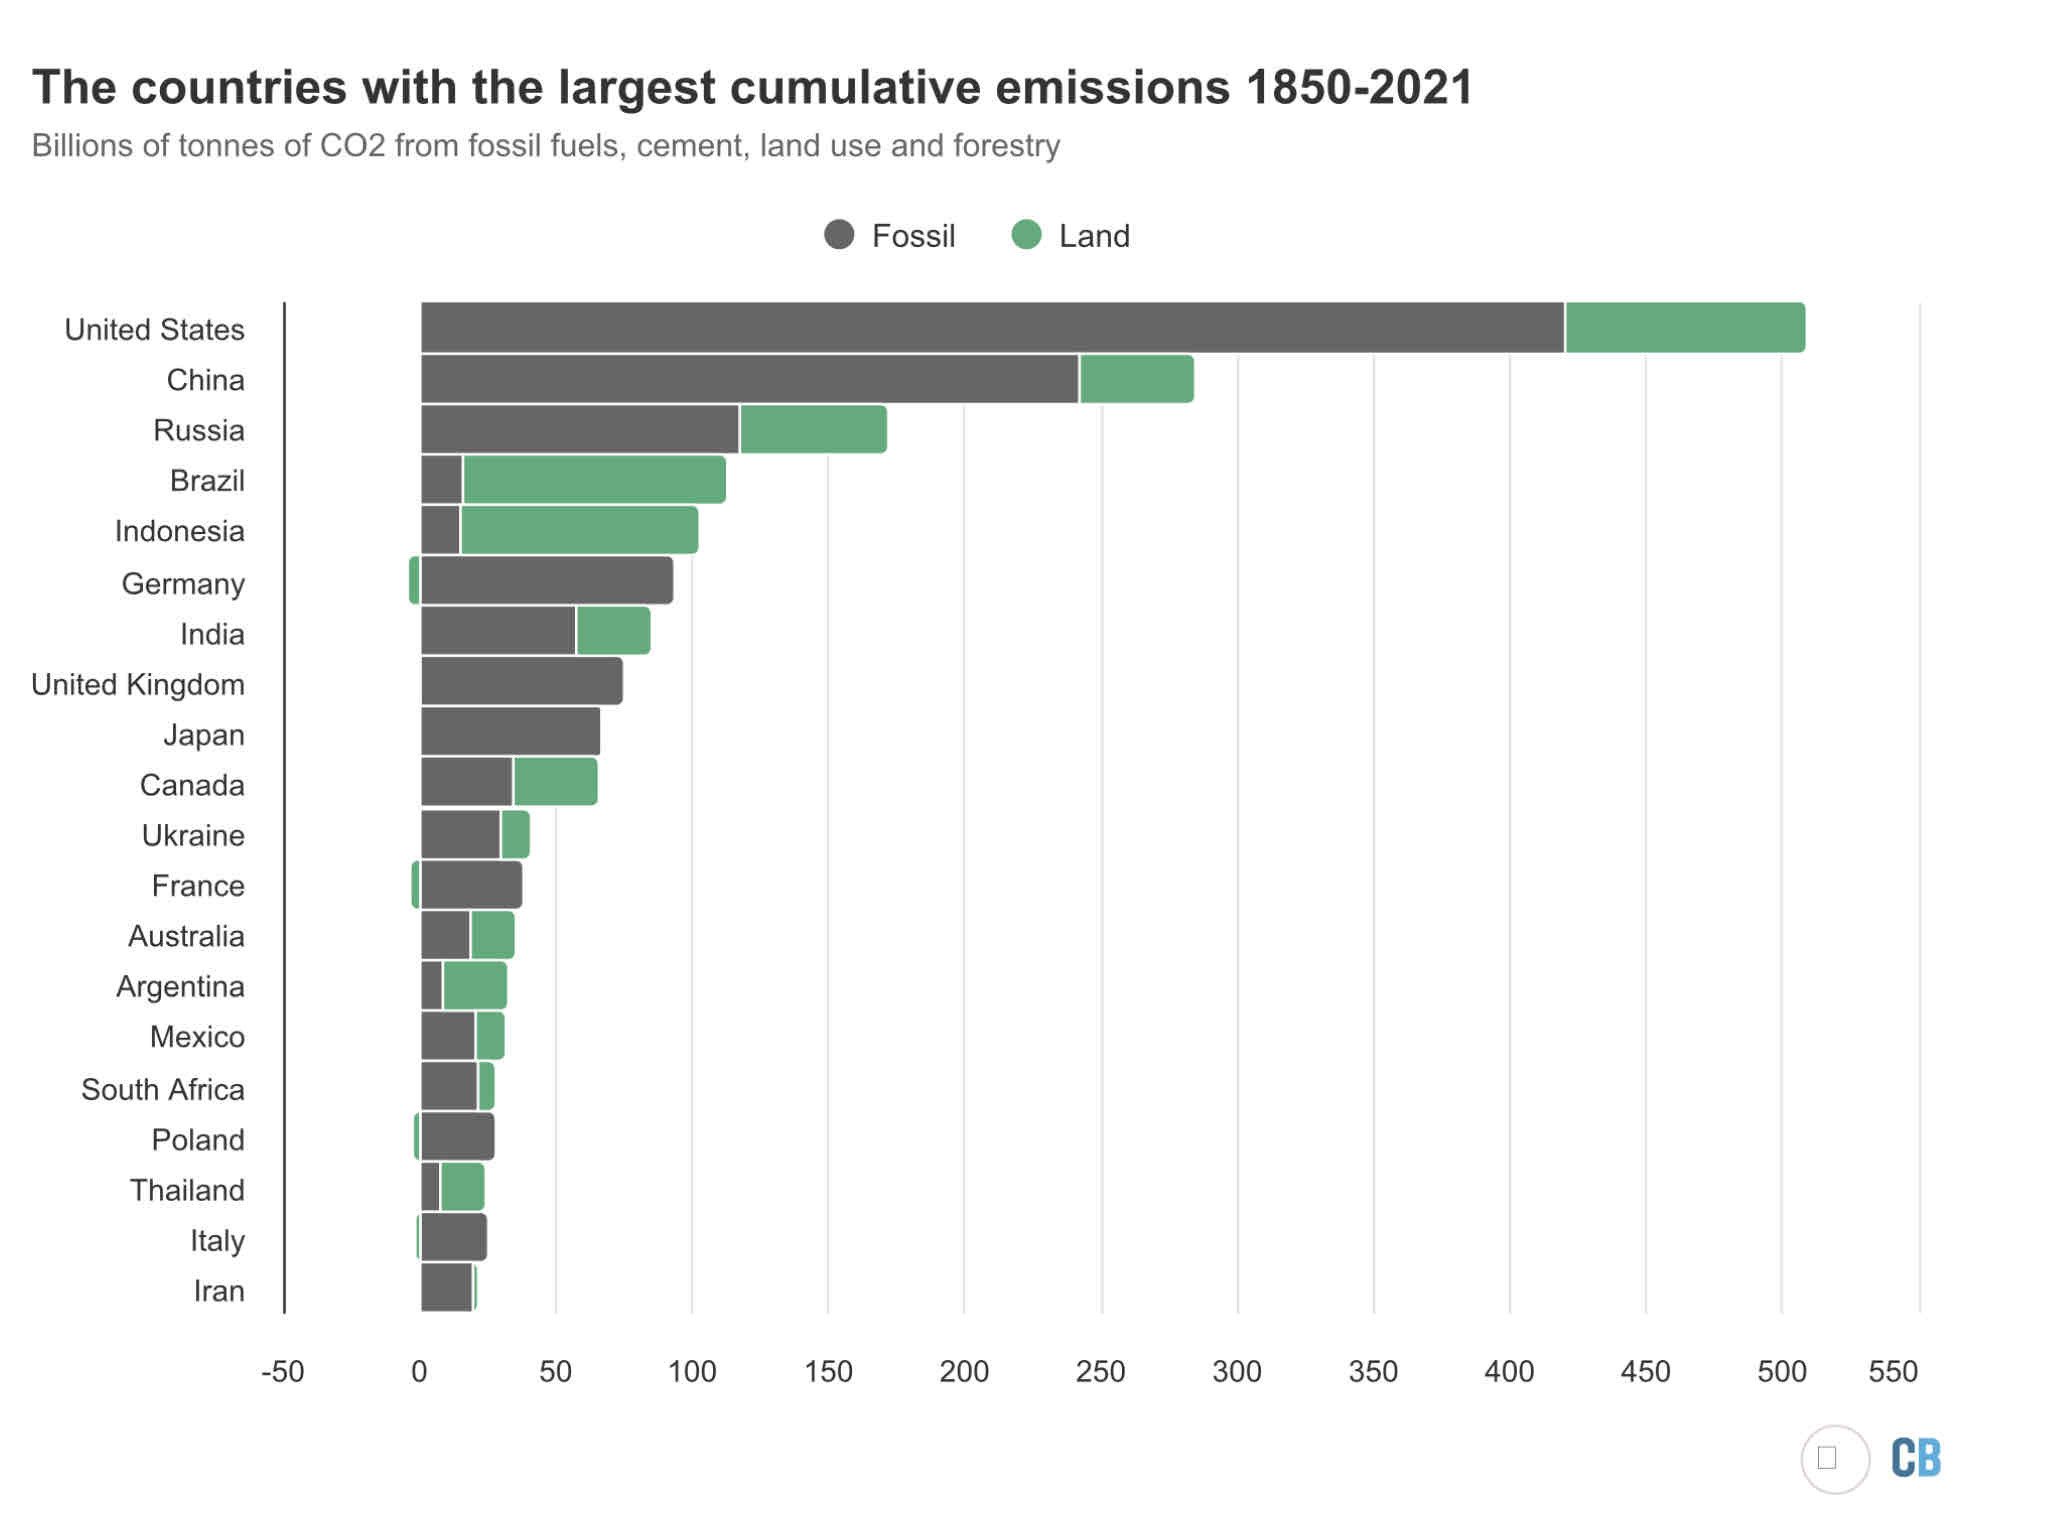 Carbon emissions over time